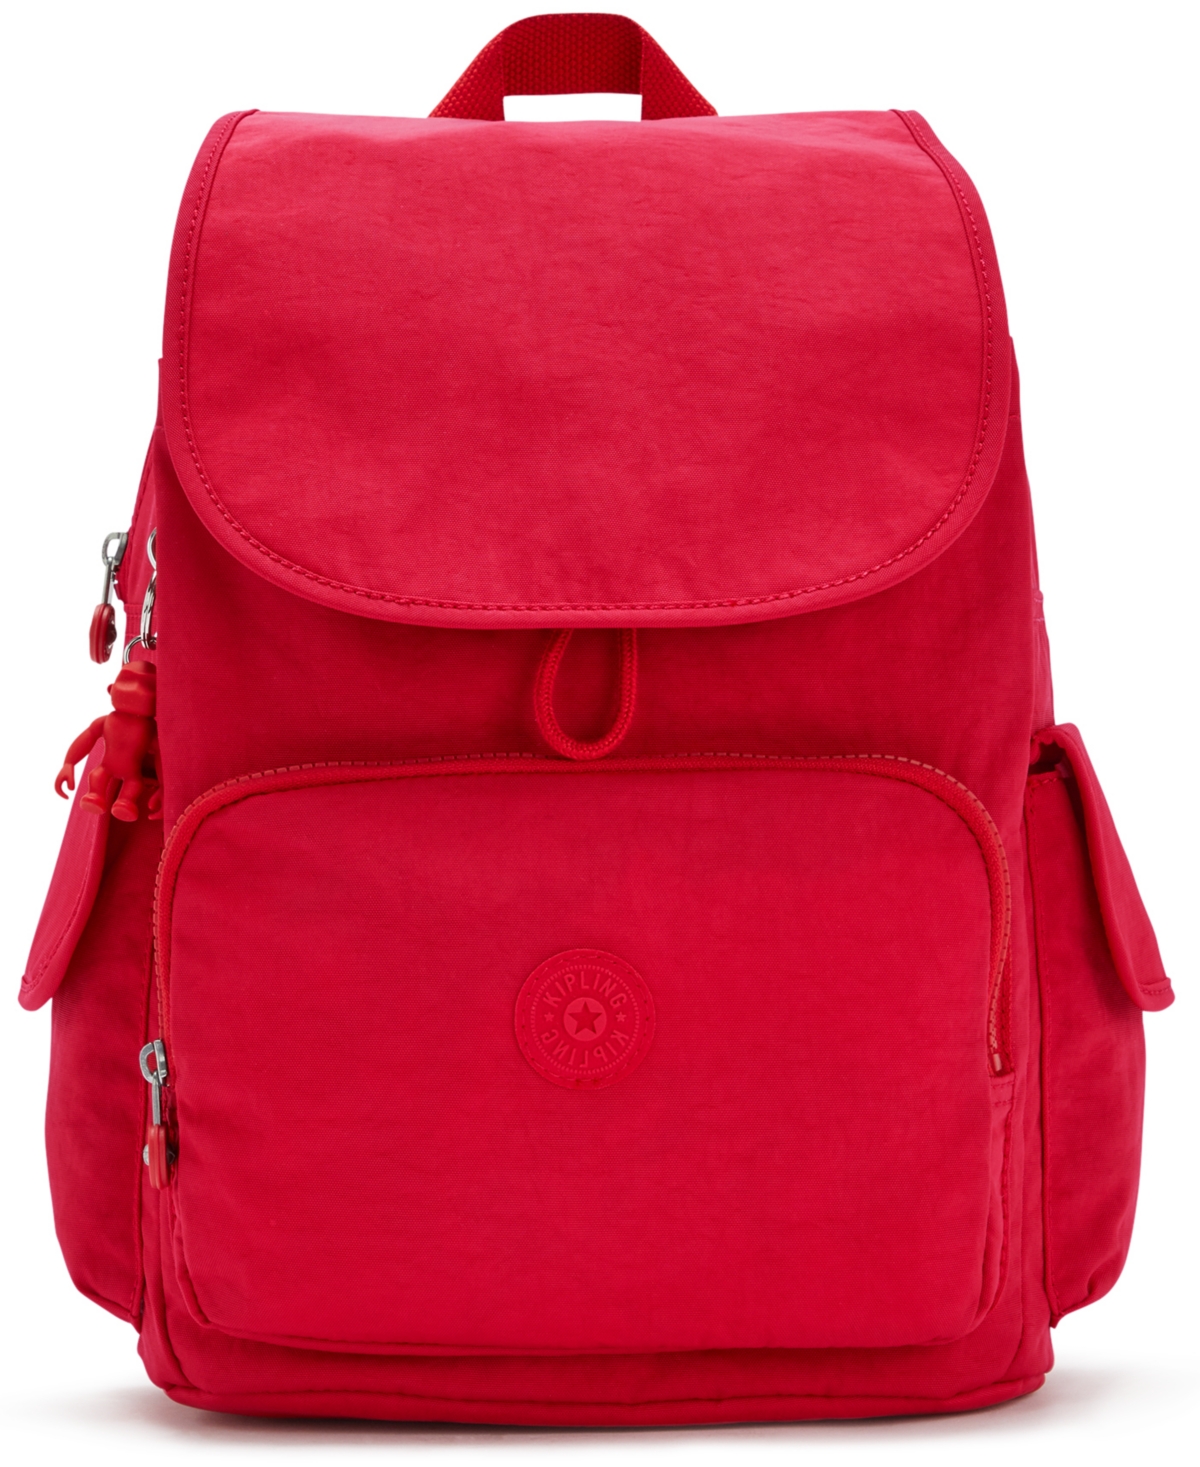 Kipling City Pack Backpack In Red Rouge